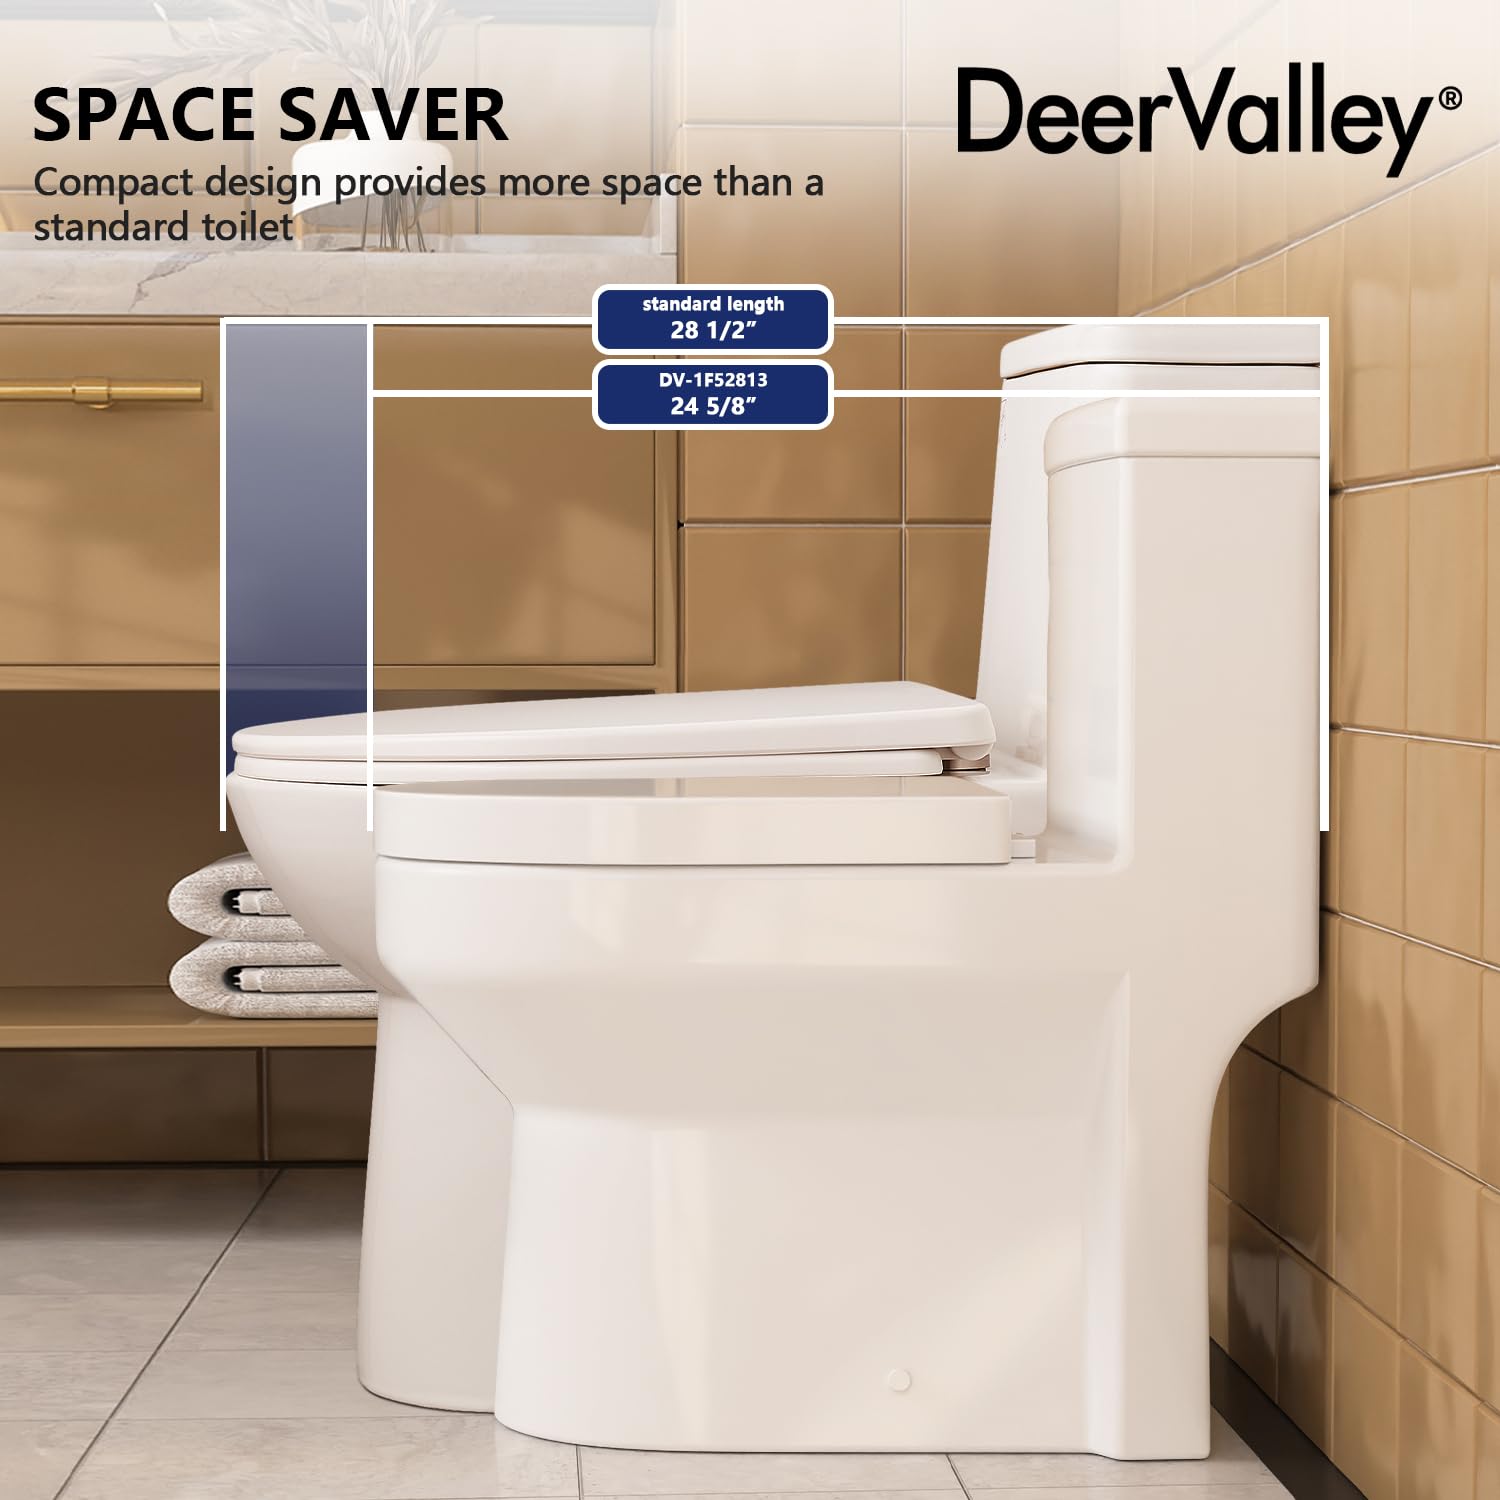 DeerValley Small Toilet 12